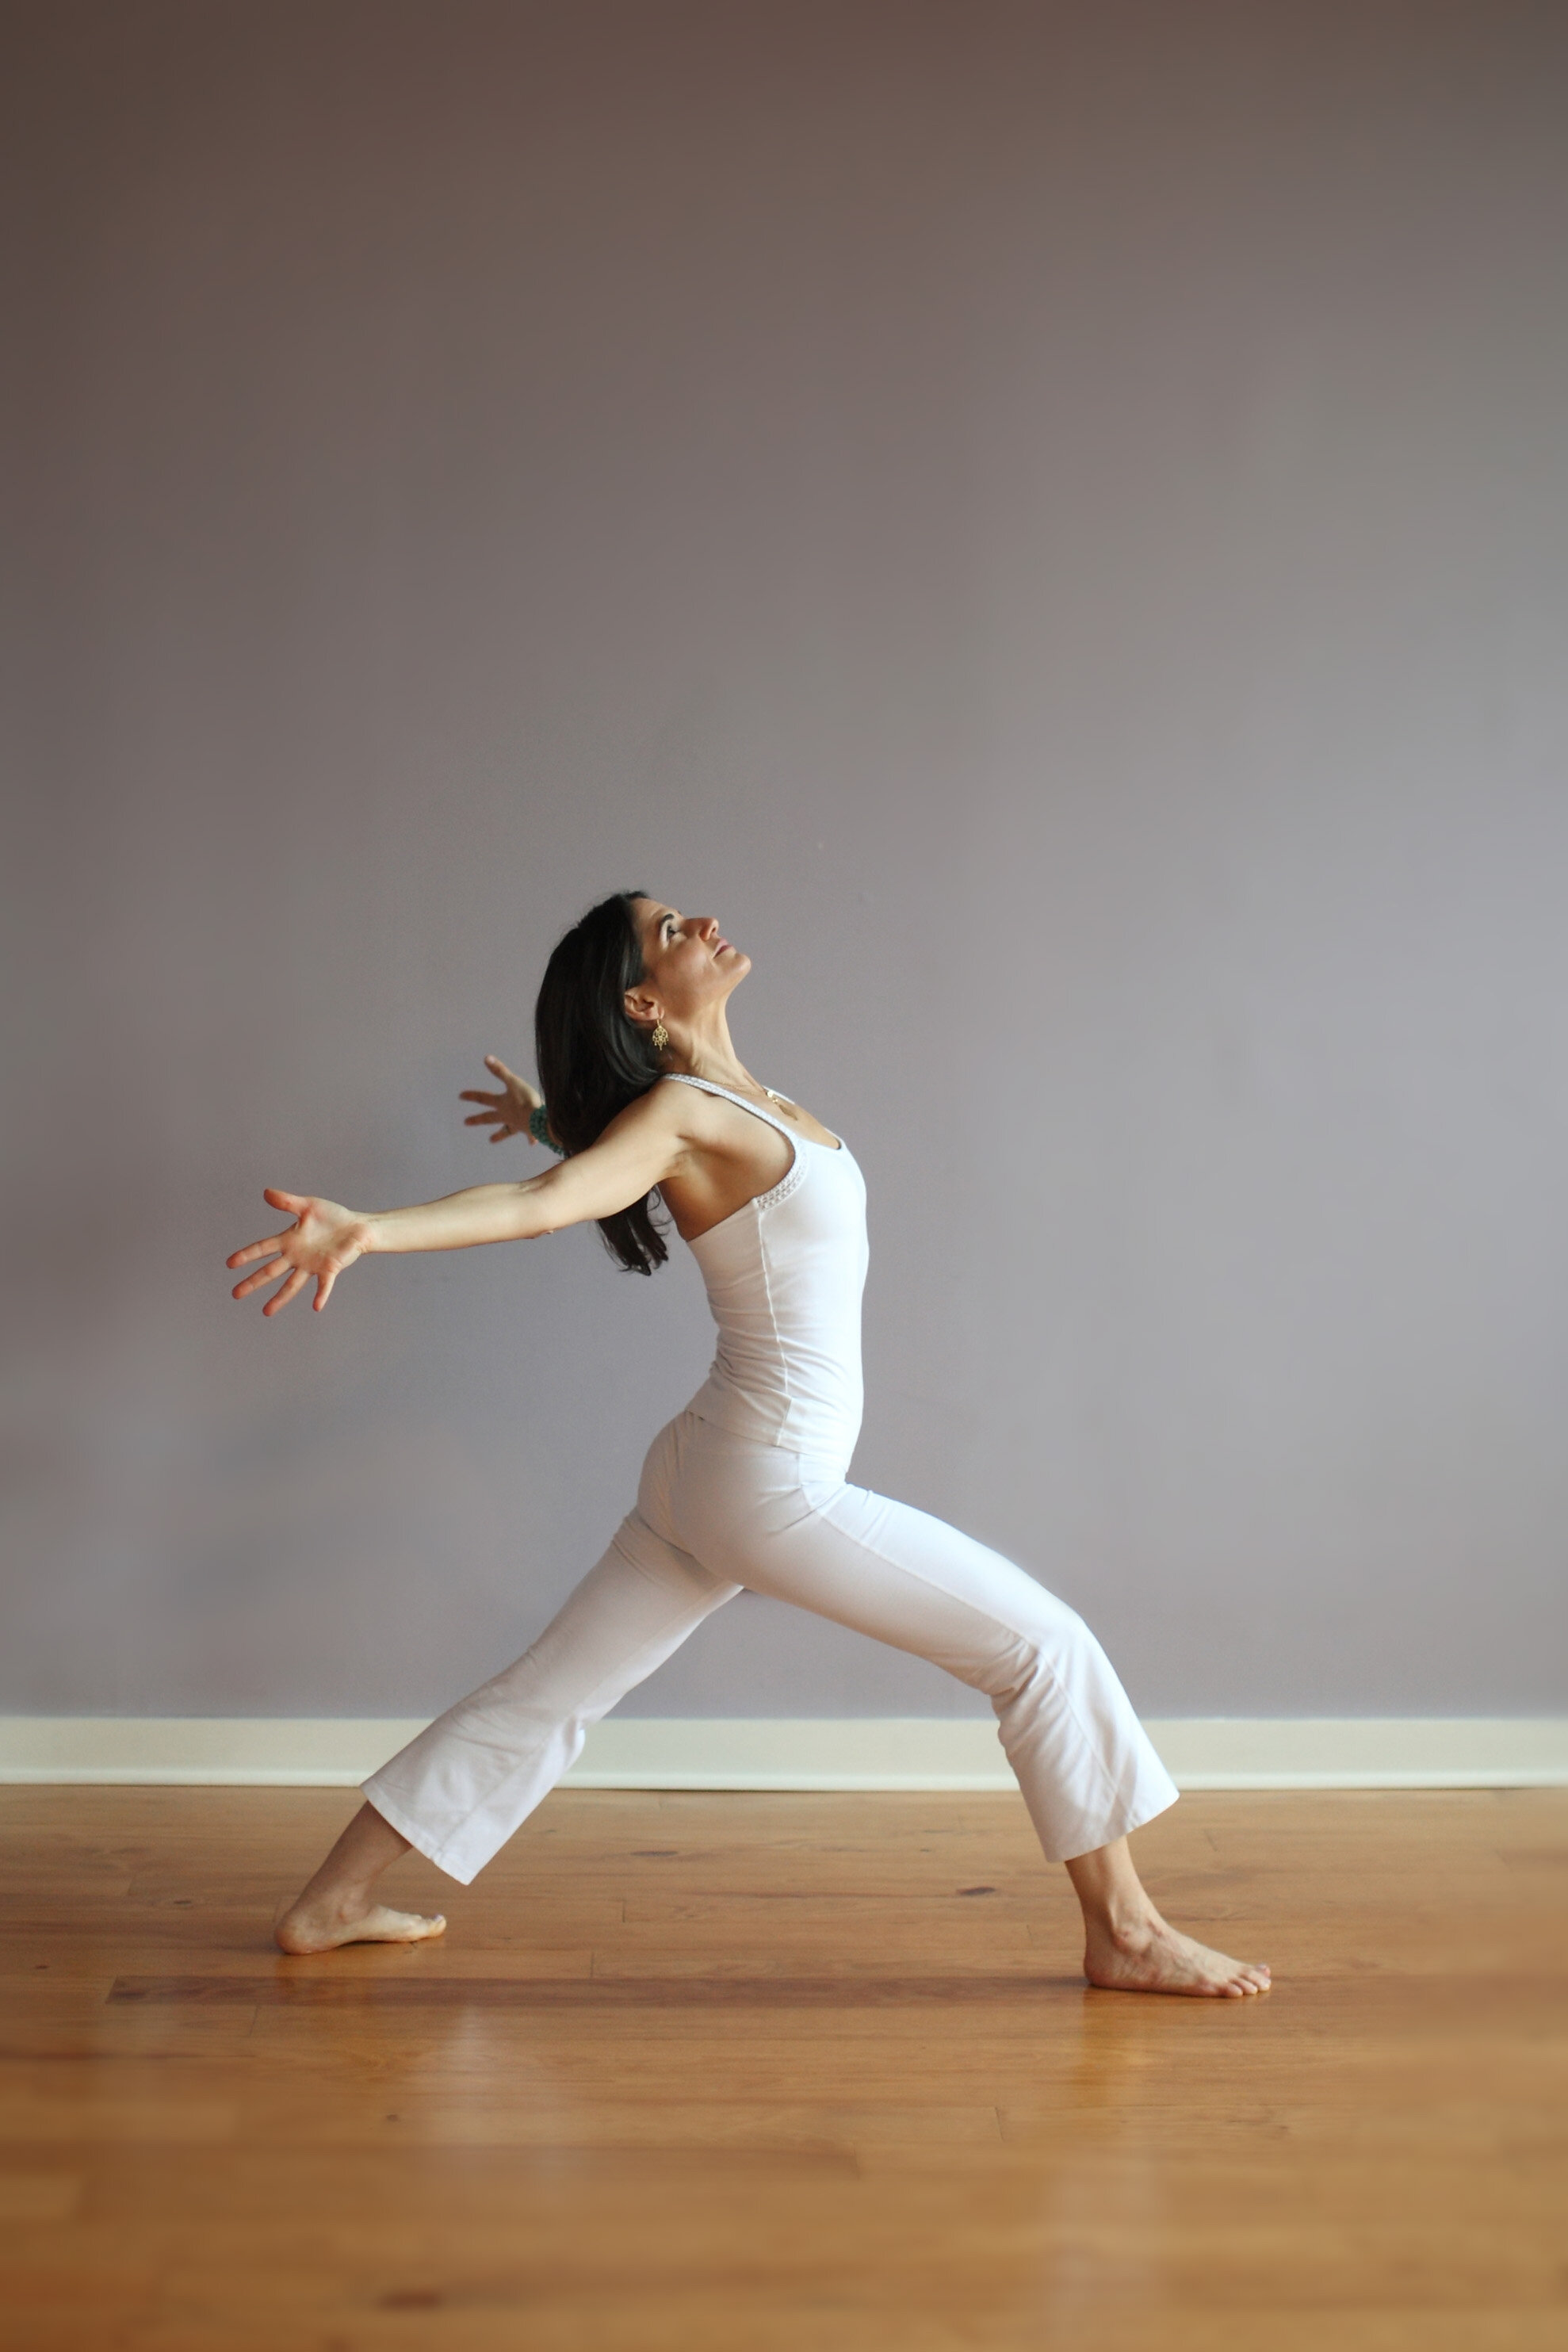 Yoga Teacher • Meditation • Relaxation— jillian pransky